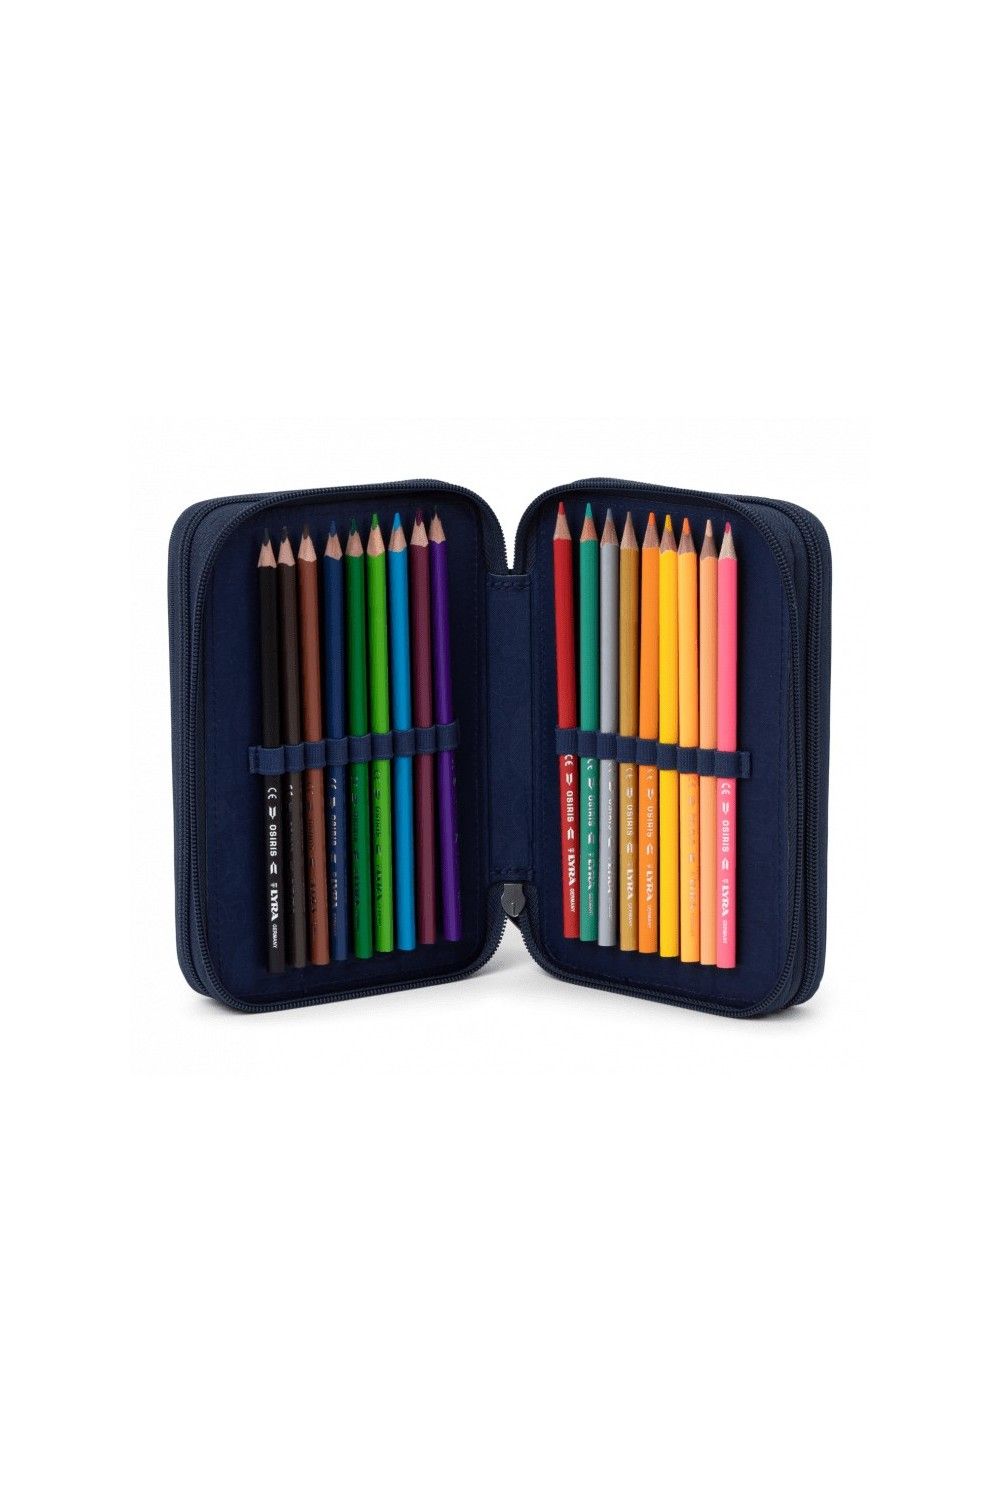 Ergobag maxi pencil case TriBäratops